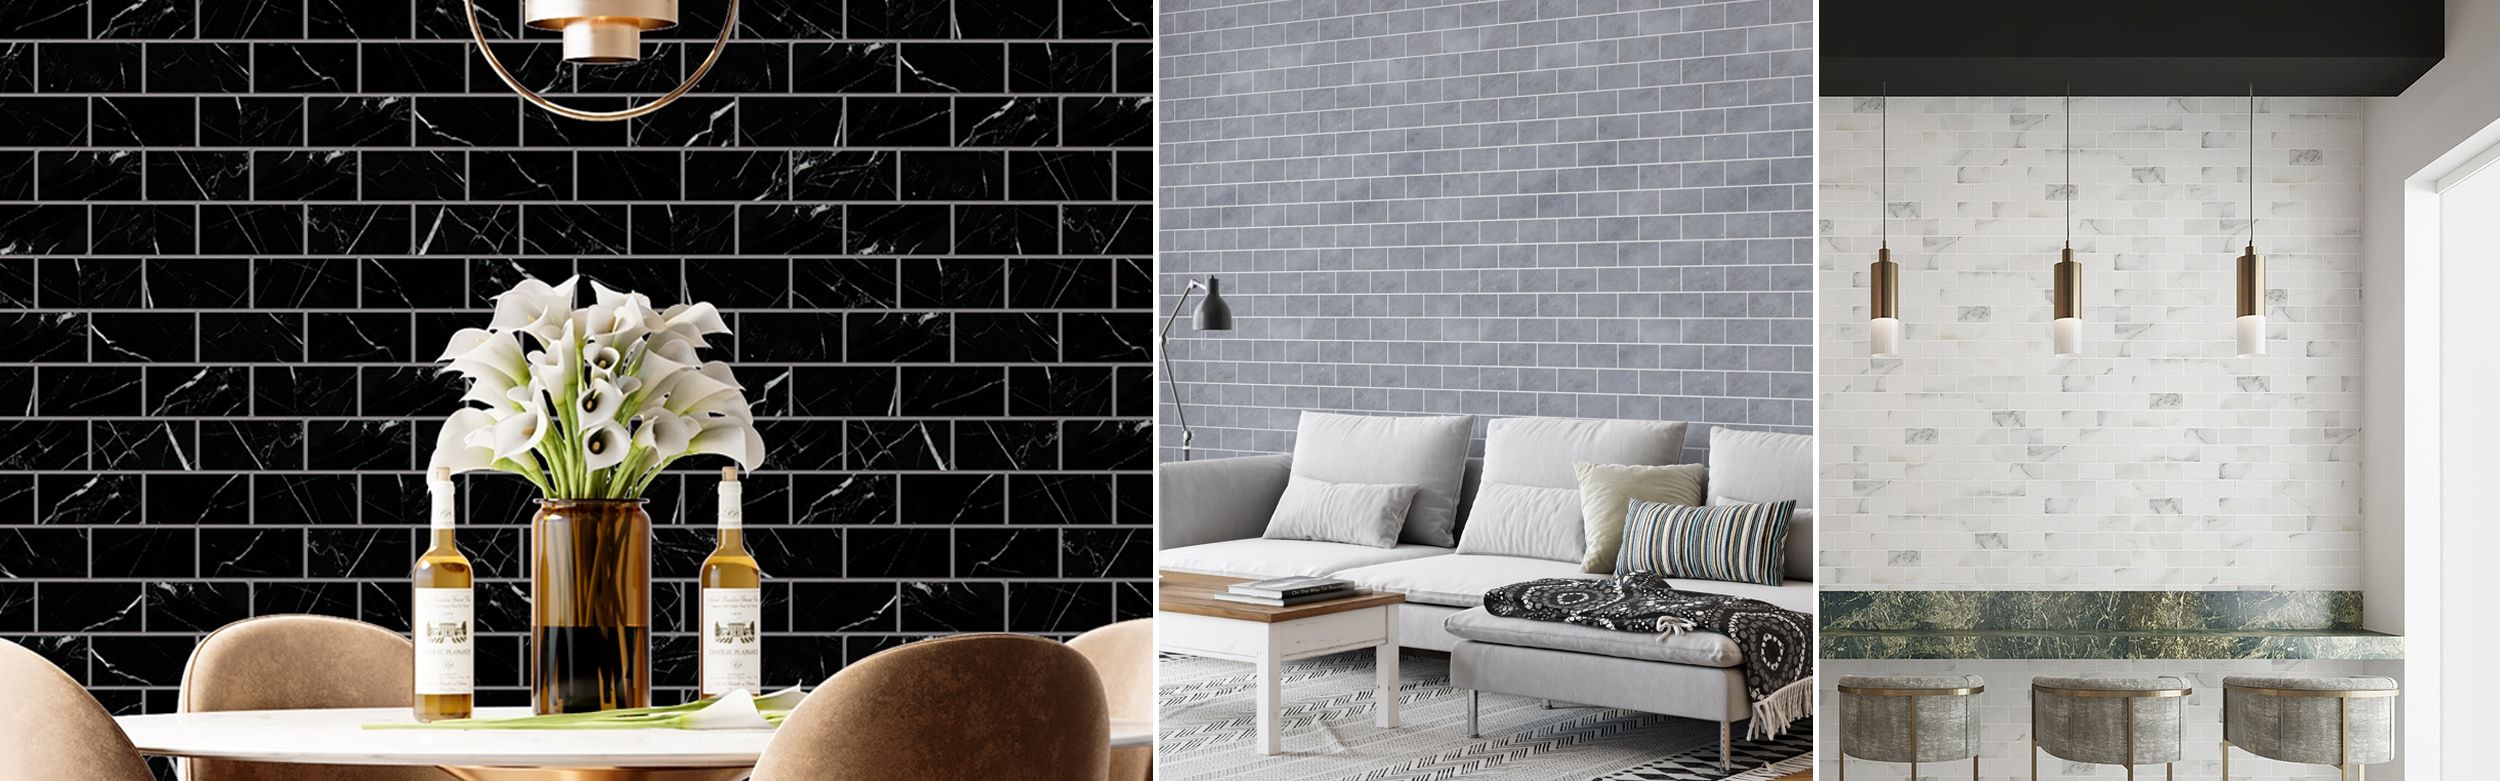 StoneTileDepot | Discount Tiles, Mosaics, Marble, Porcelain | Tile Outlet